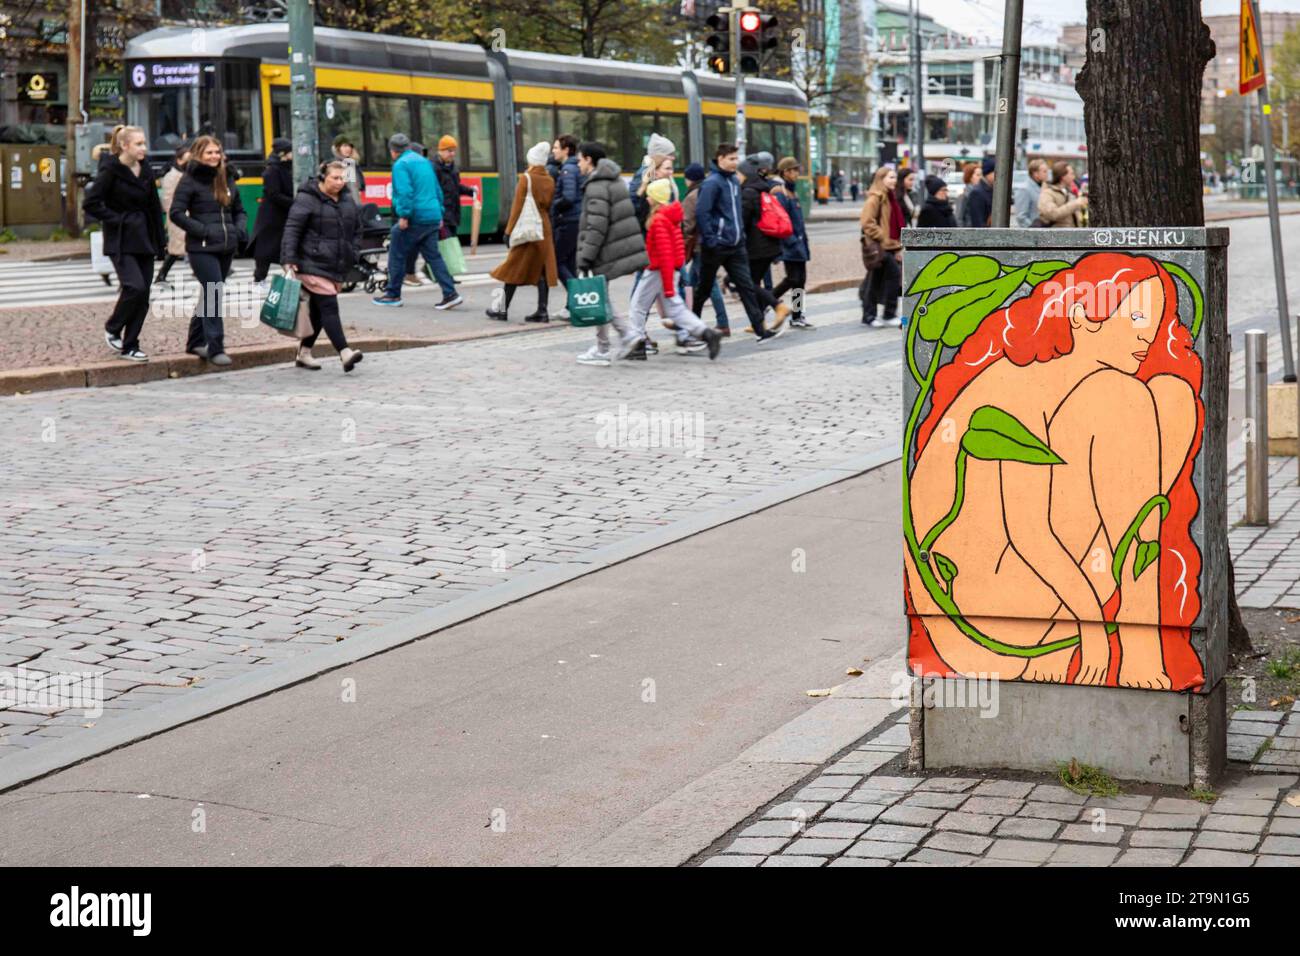 Street art on street cabinet with people crossing Mannerheimintie in the background in Helsinki, Finland Stock Photo